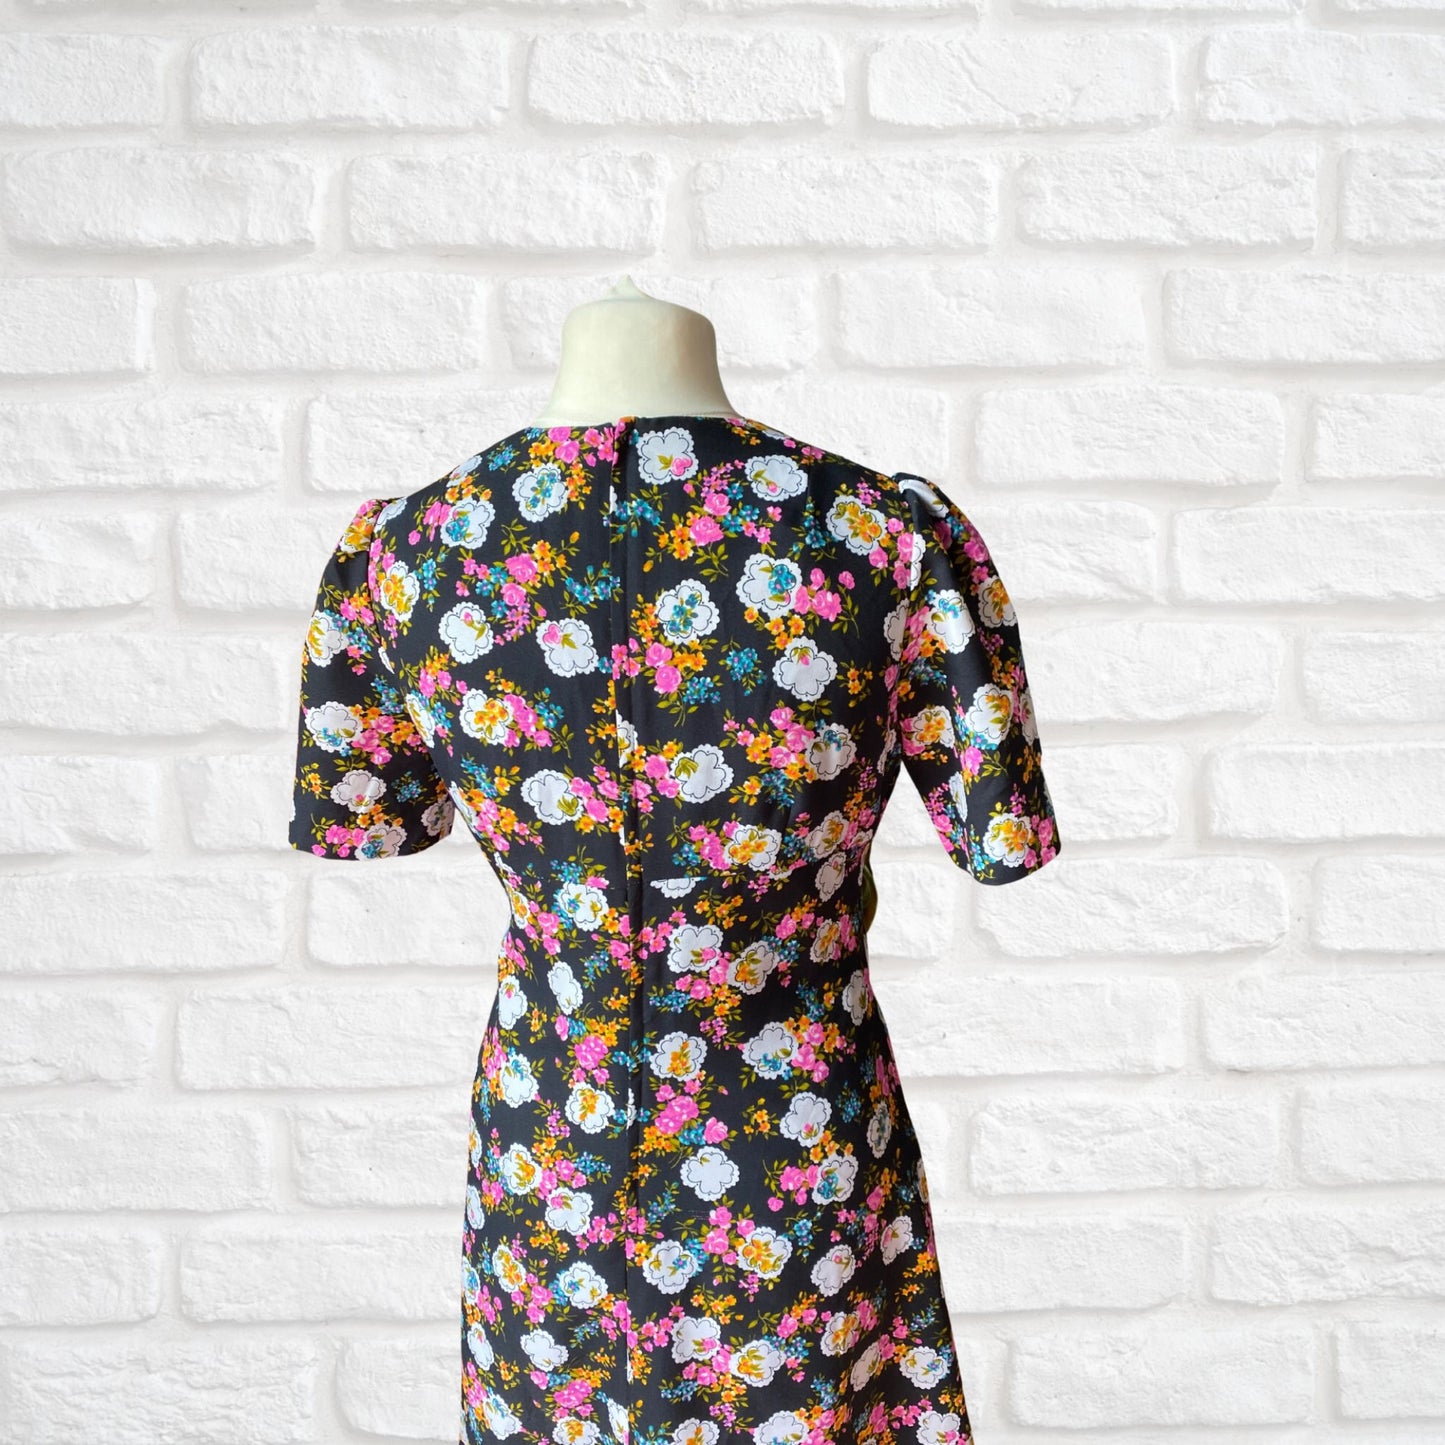 70s black and bright floral print short sleeved vintage tea dress.   Approx UK size 12-14